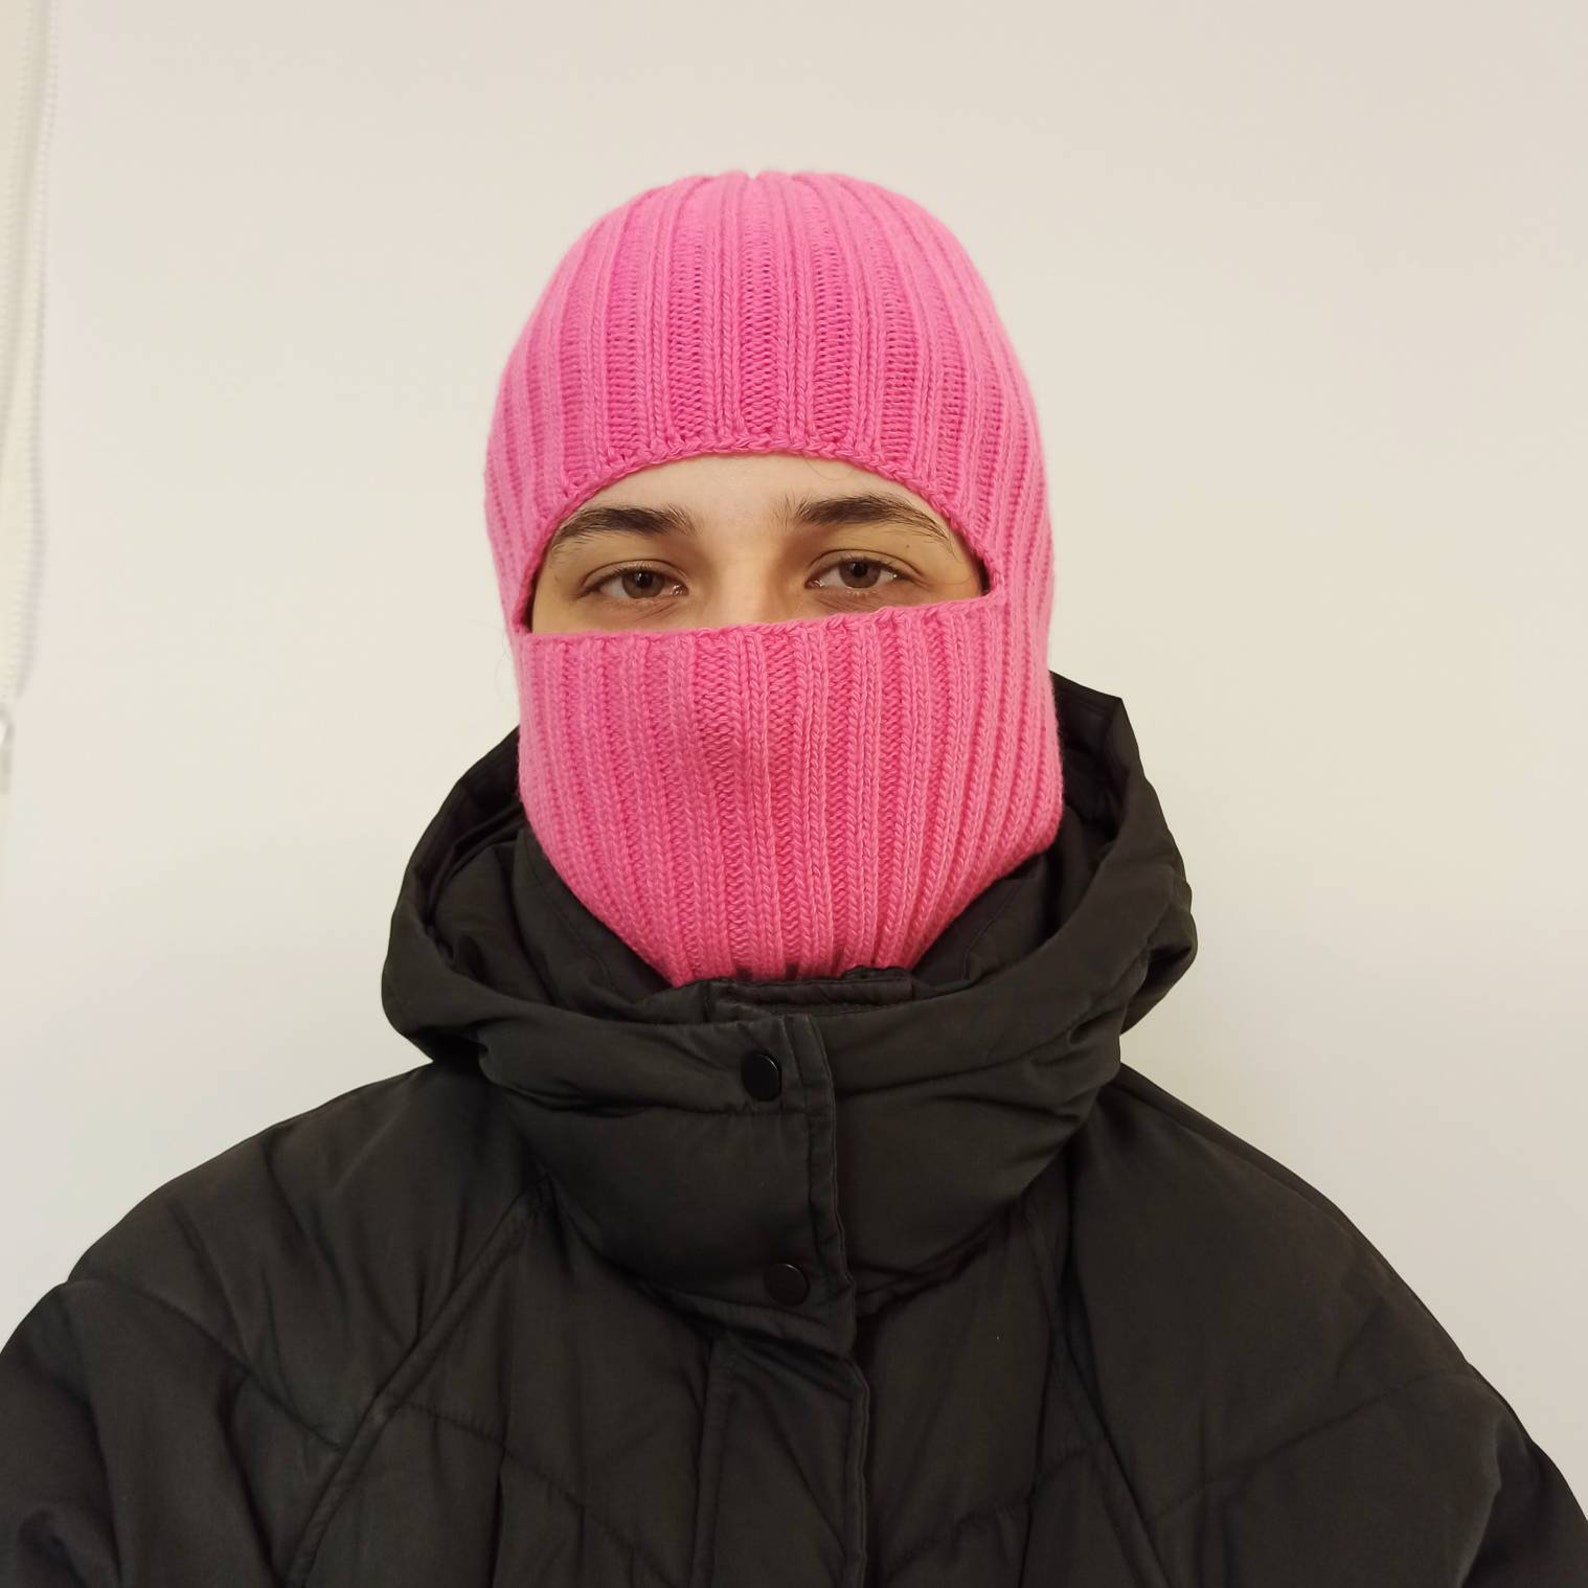 Knit Balaclava hot pink handknit balaclava hat balaclava | Etsy